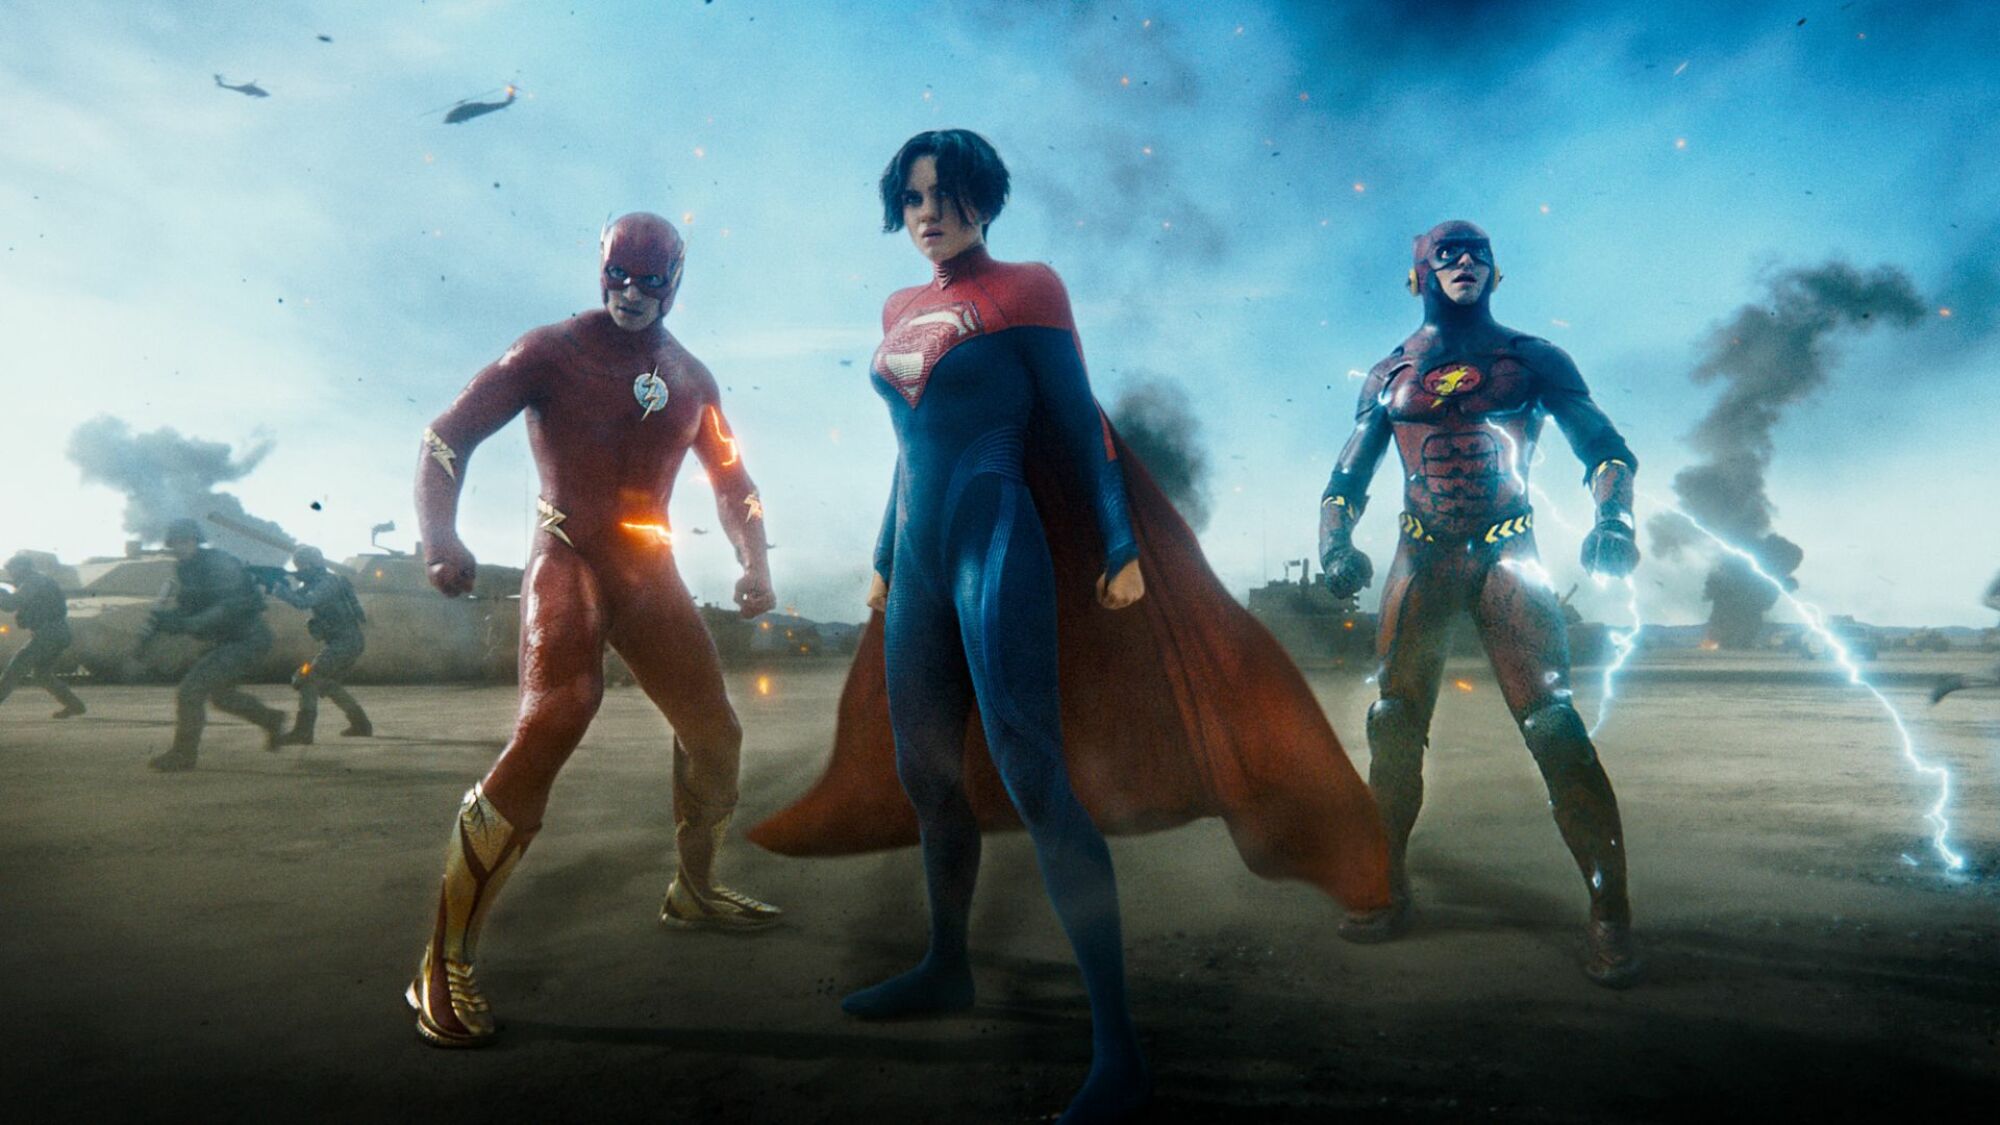 EZRA MILLER as Barry Allen/The Flash, SASHA CALLE as Kara Zor-El/Supergirl and EZRA MILLER as Barry Allen/The Flash in Warner Bros. Pictures’ action adventure “THE FLASH,” a Warner Bros. Pictures release.